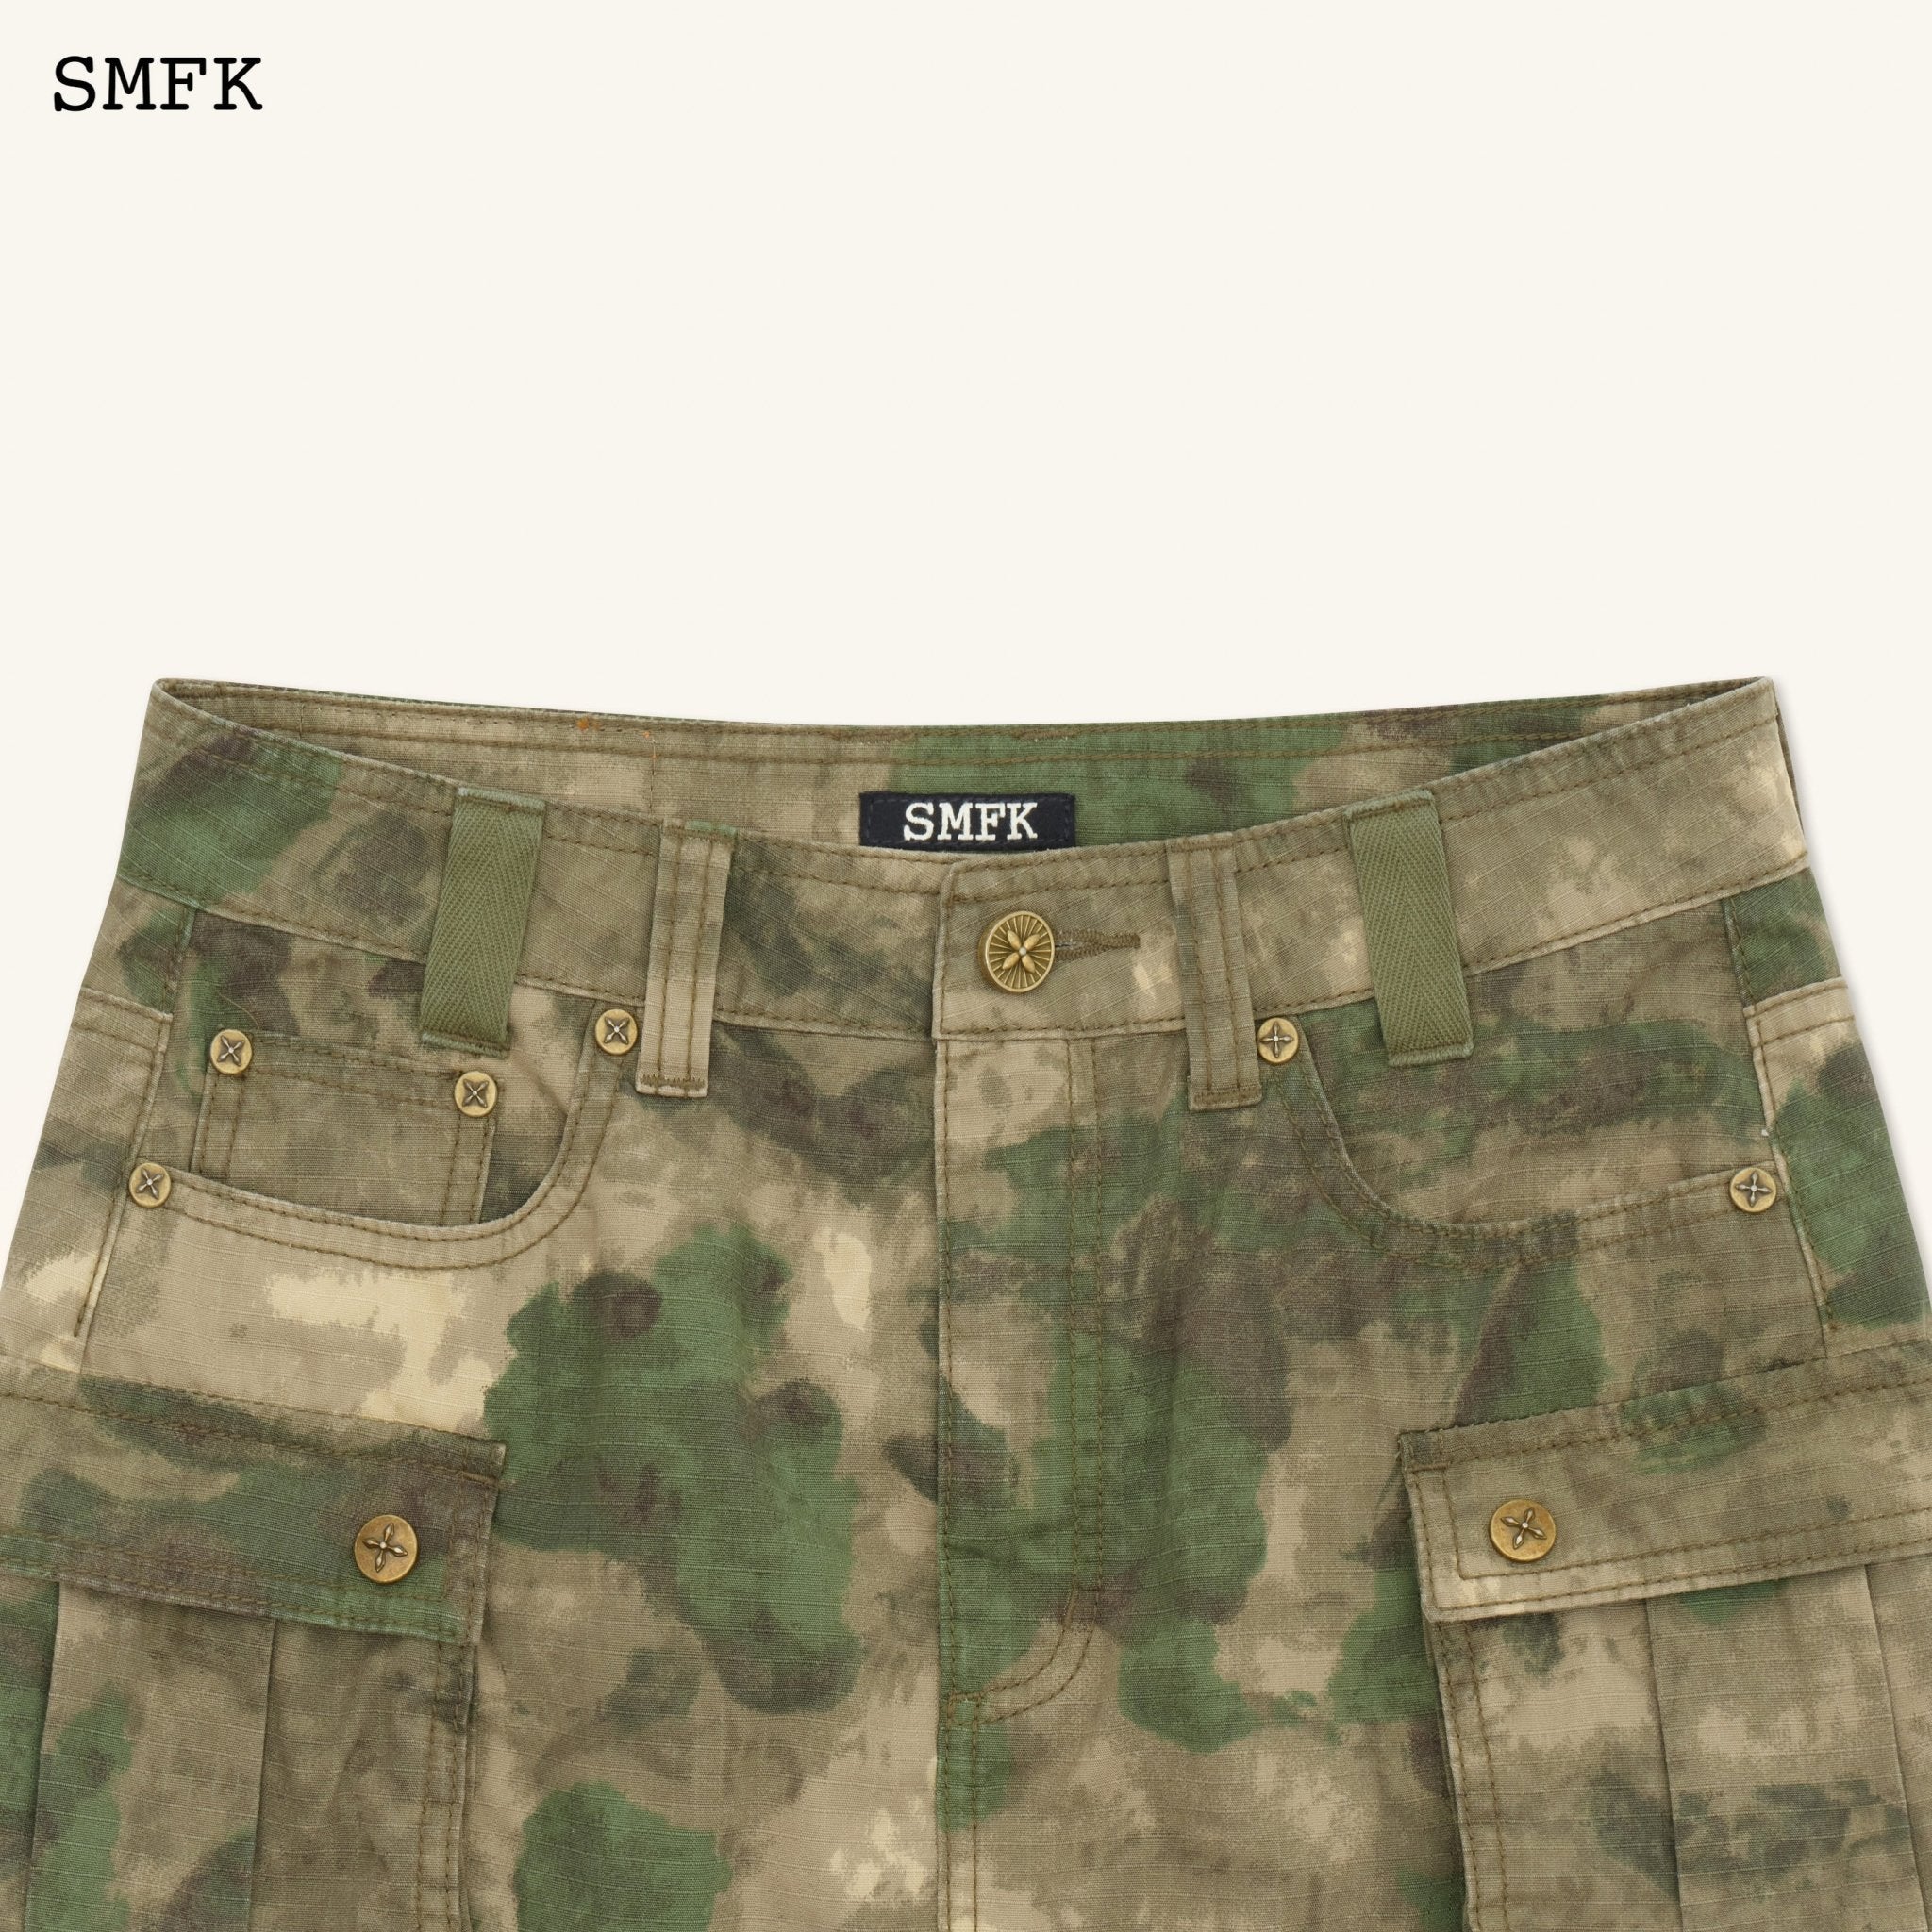 SMFK Compass Viper Green Camouflage Workwear Mini Skirt | MADA IN CHINA